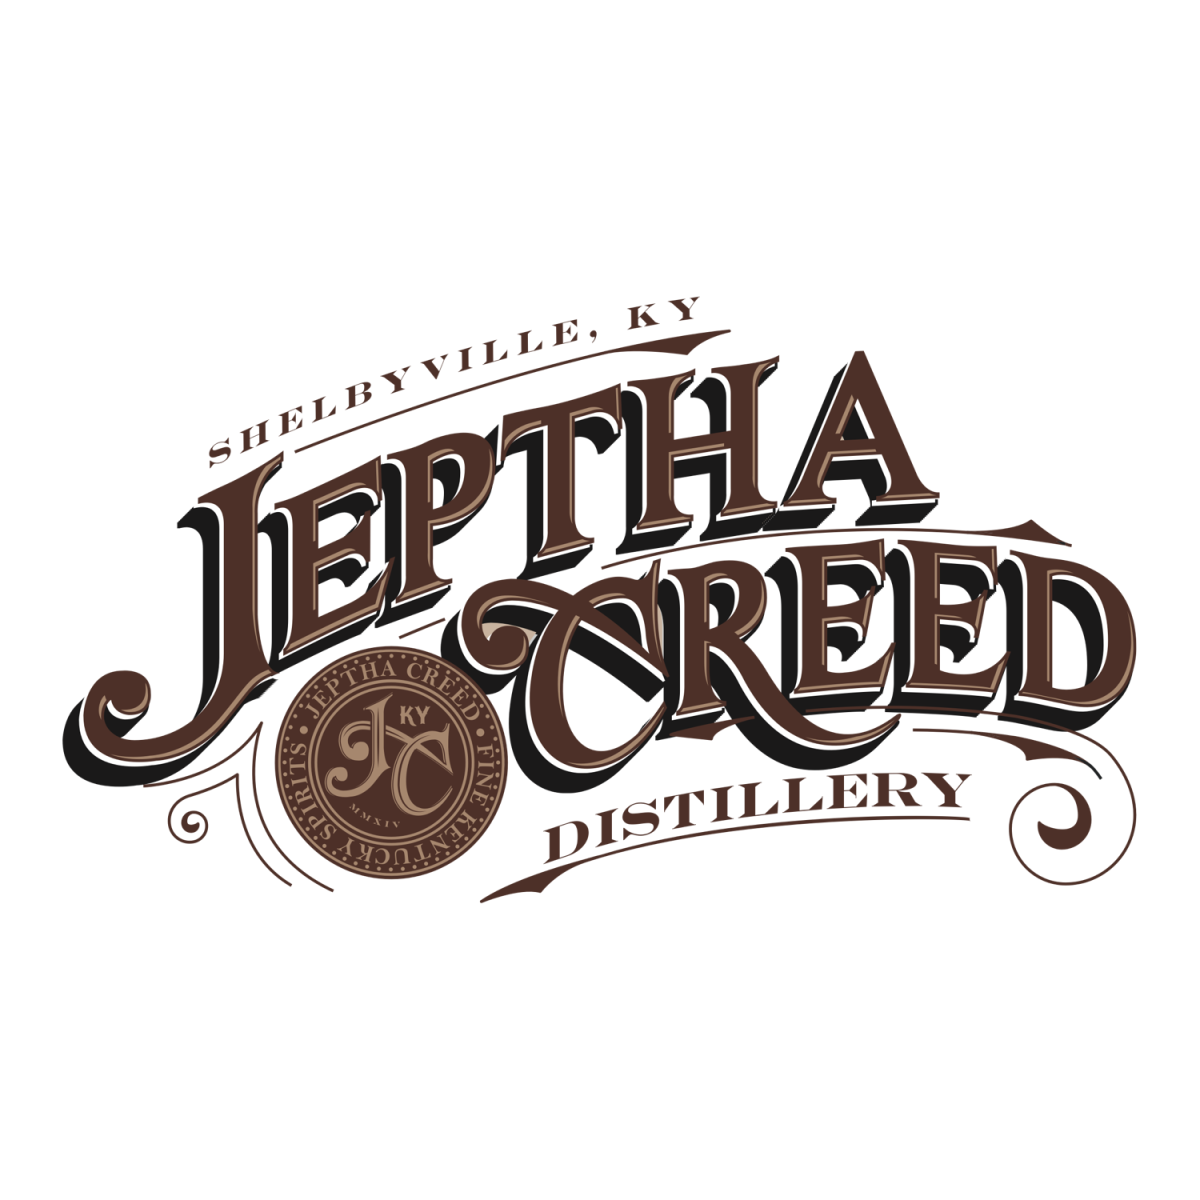 jeptha creed distillery log 2